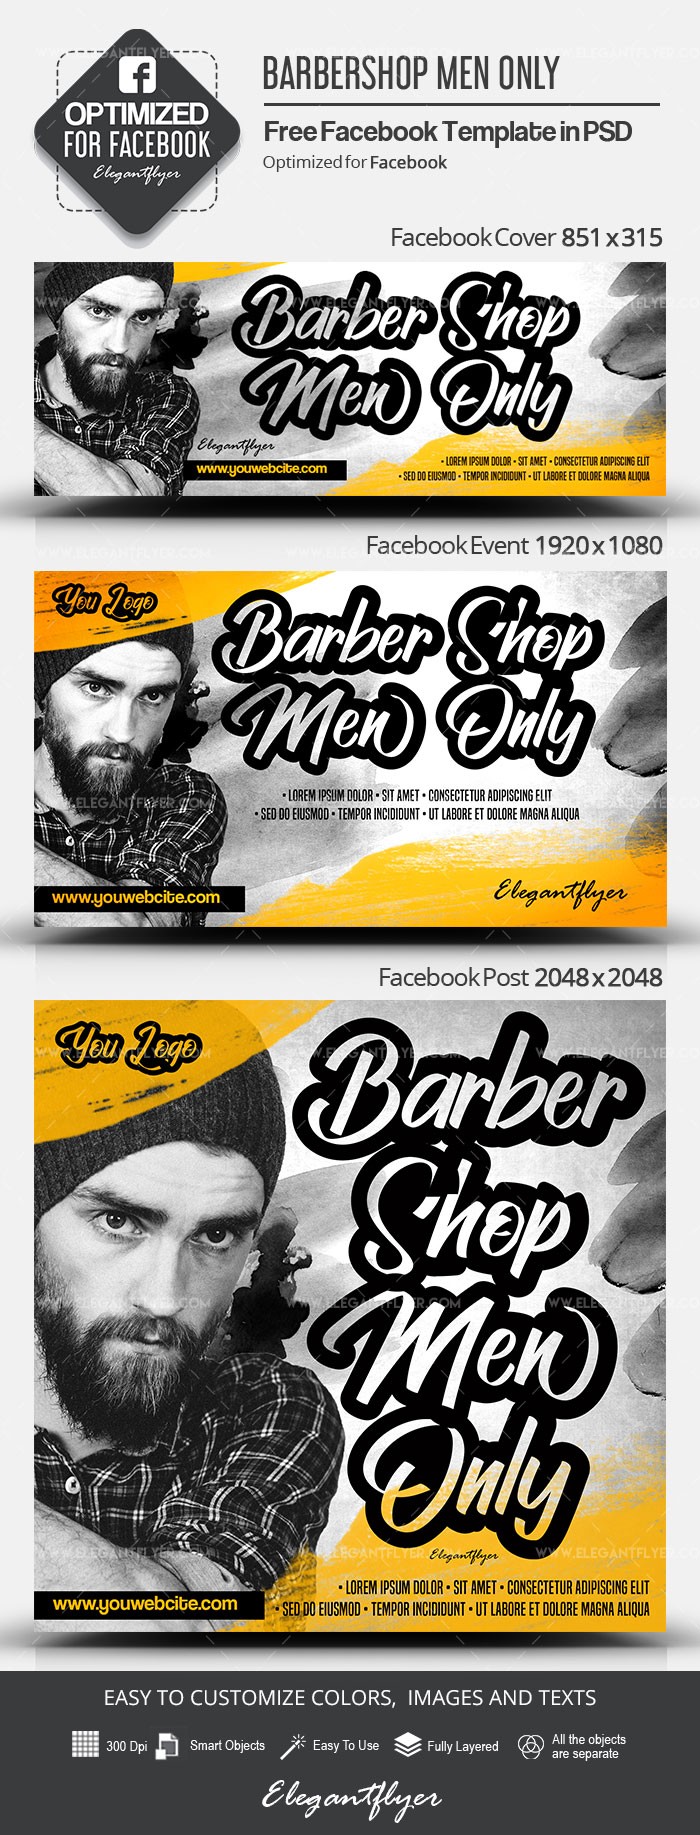 Barbershop pour hommes seulement sur Facebook by ElegantFlyer